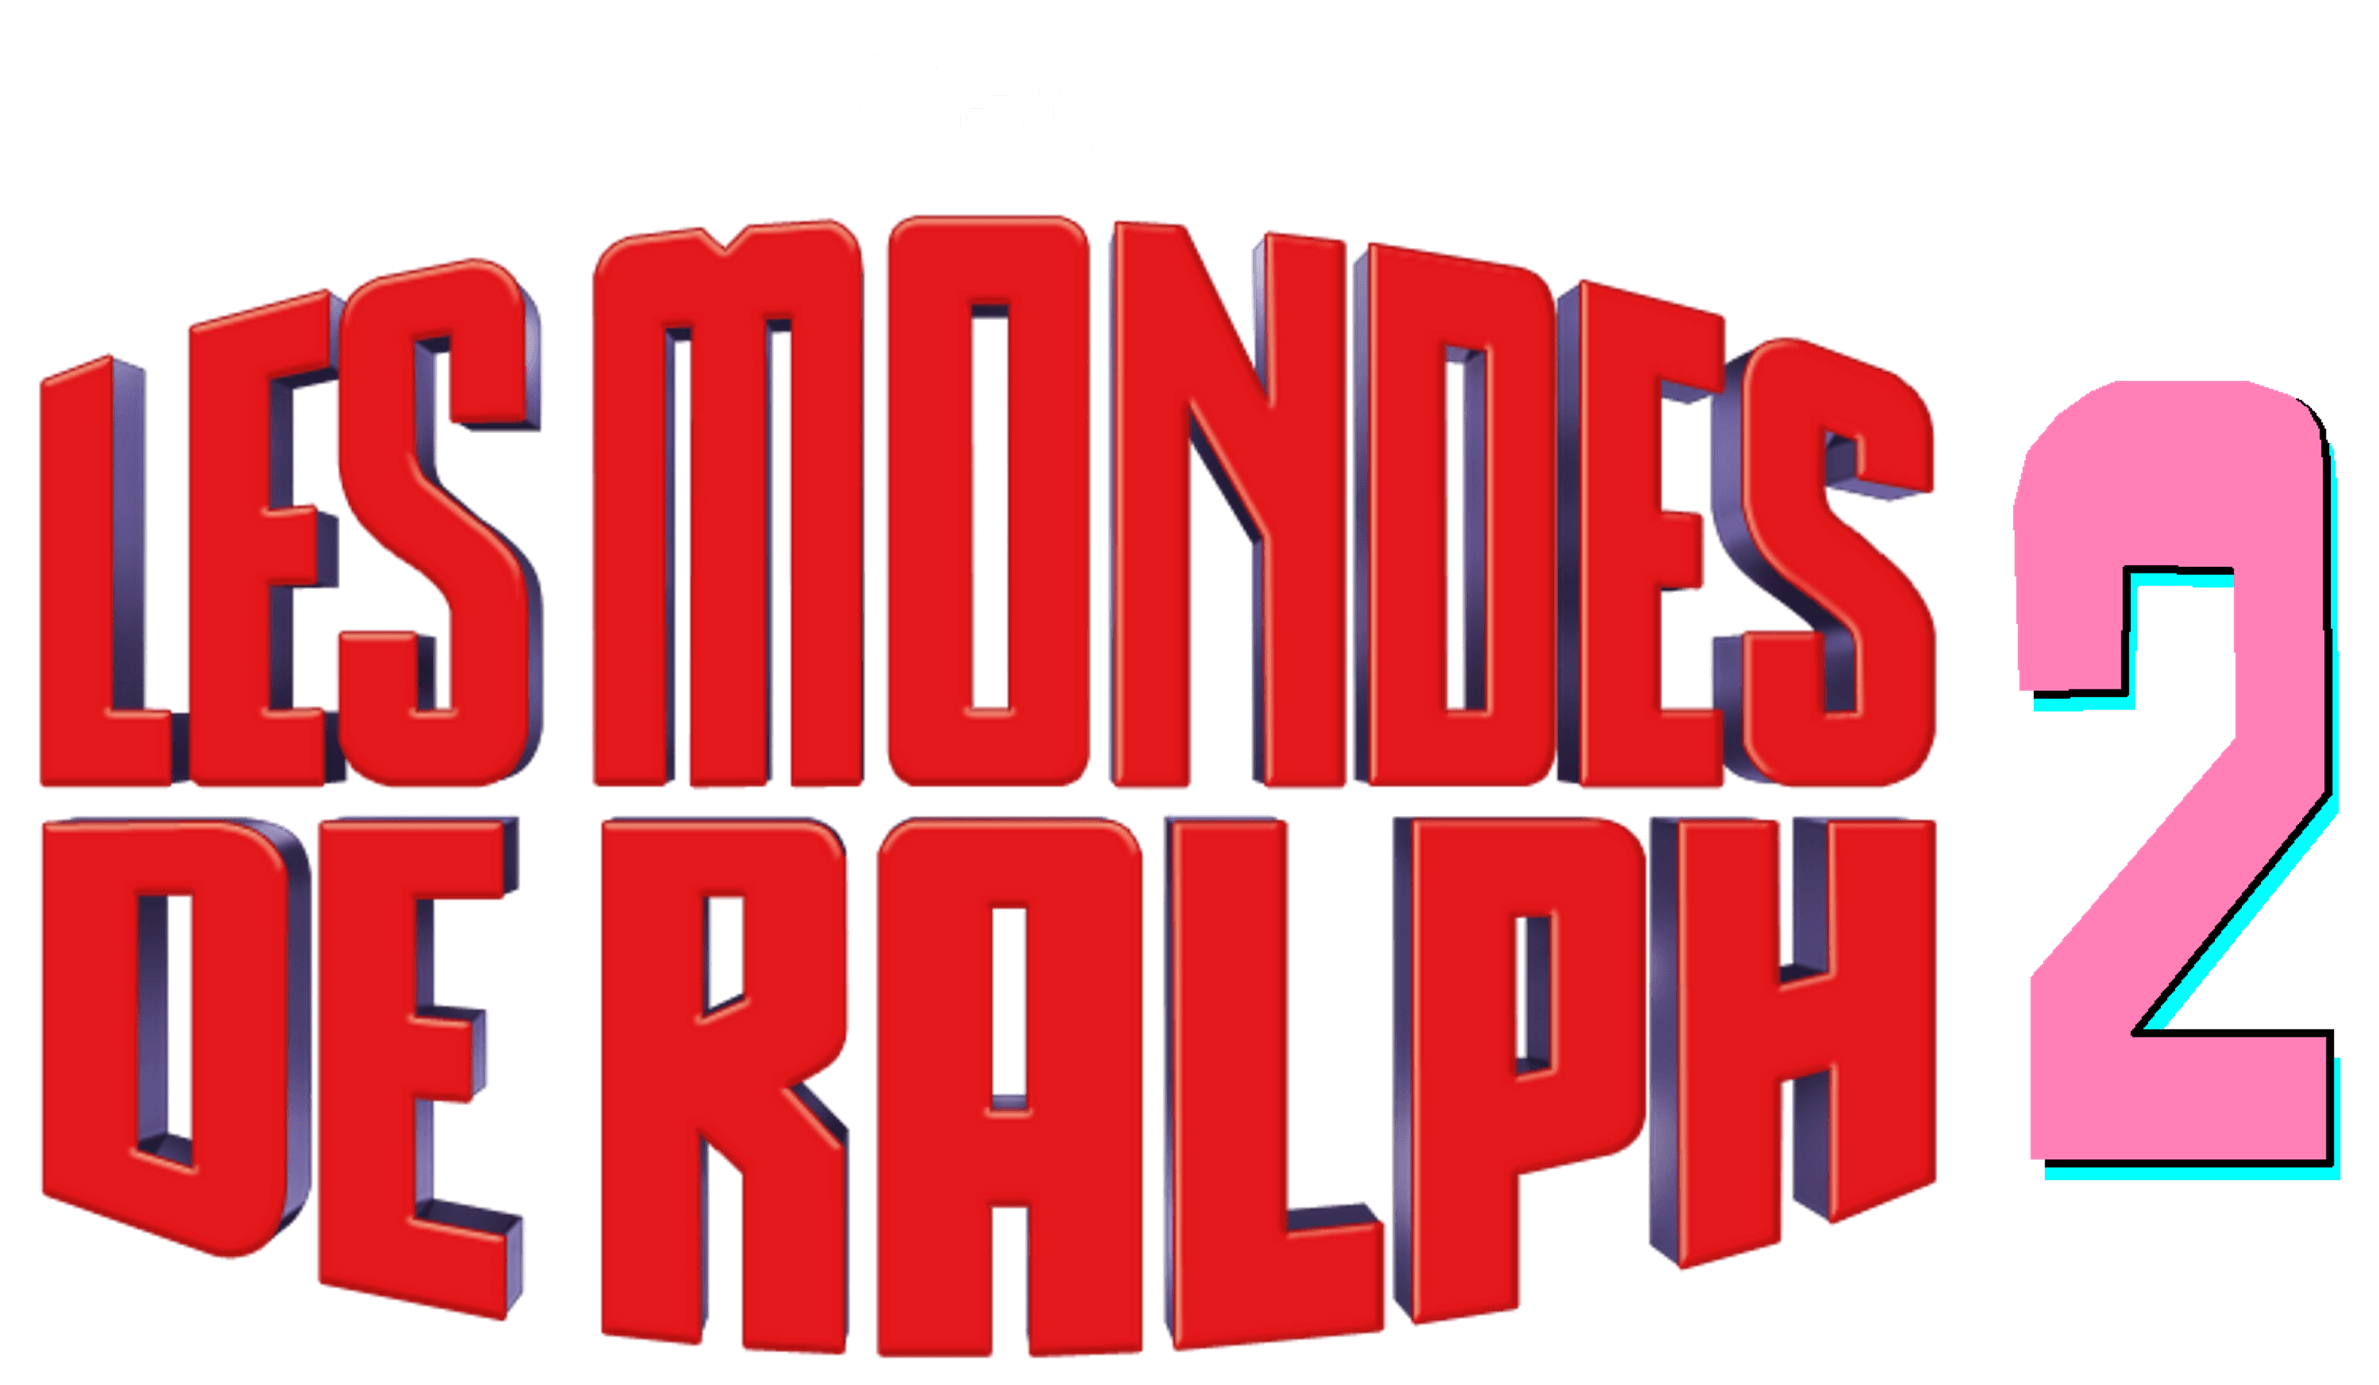 Wreck Logo - Les Mondes de Ralph 2 Logo - Wreck-It Ralph Fan Art (38418502) - Fanpop